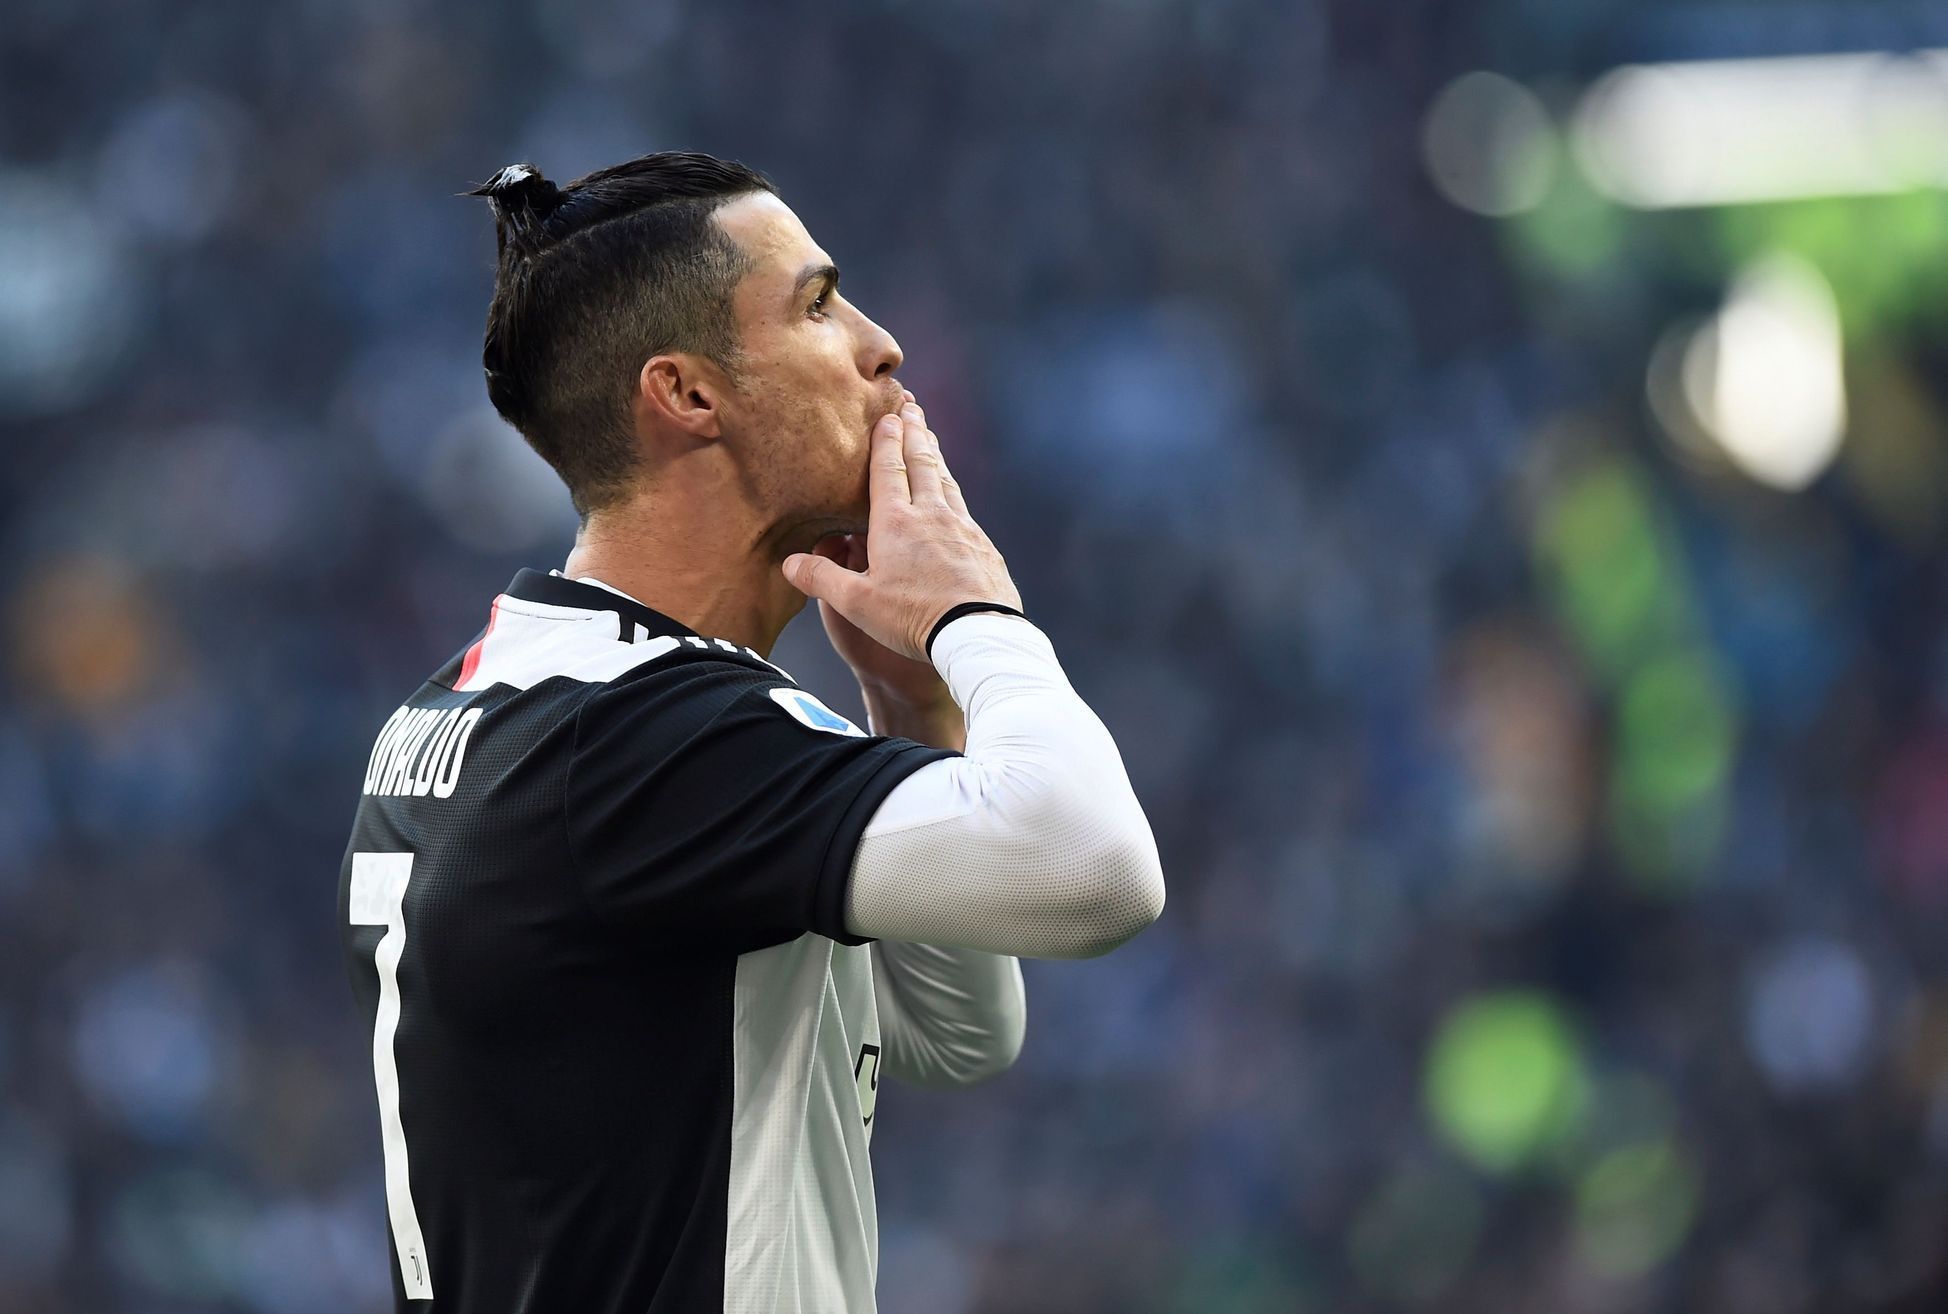 Cristiano Ronaldo slaví gól za Juventus v italské lize.